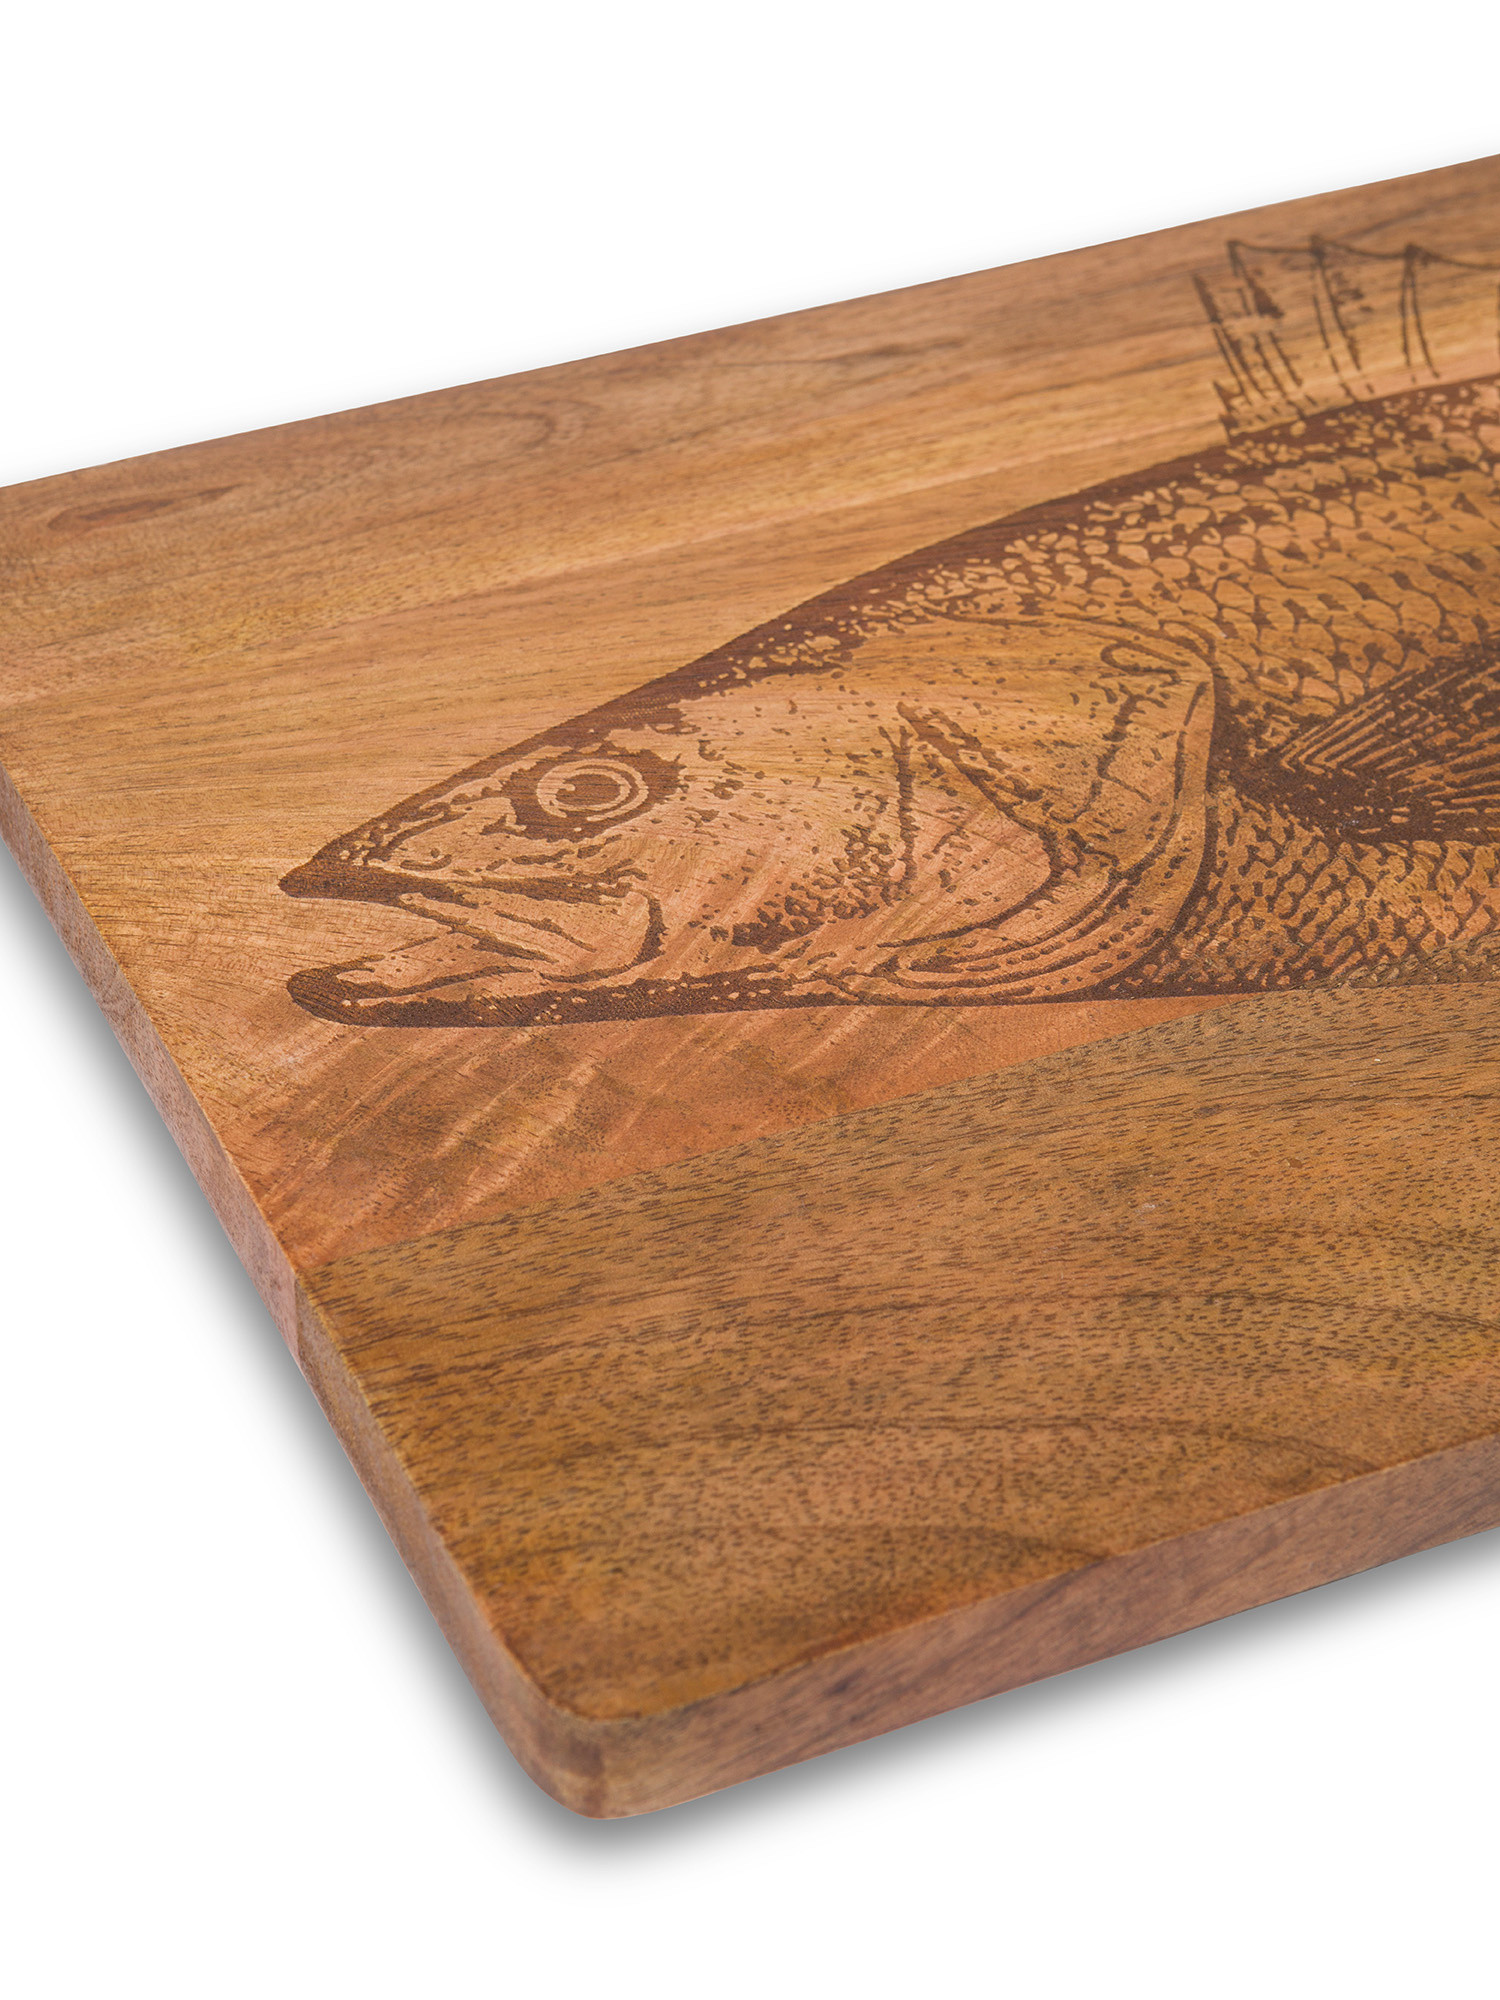 Mango wood cutting board, Natural, large image number 1